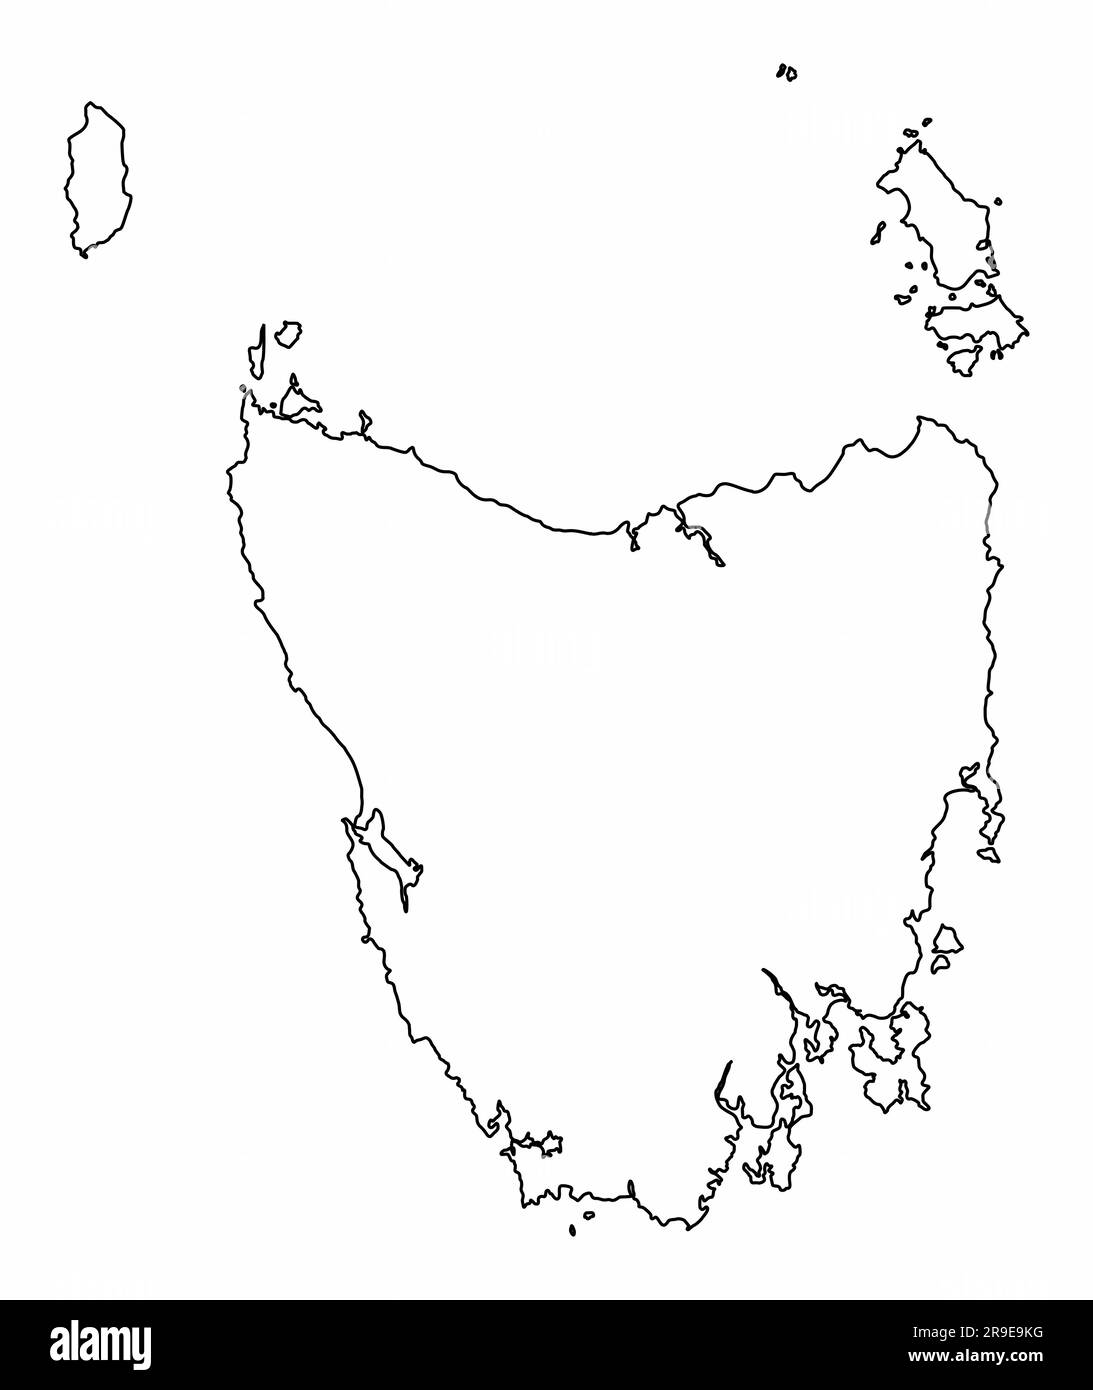 Tasmania map outline isolated on white background, Australia Stock Vector